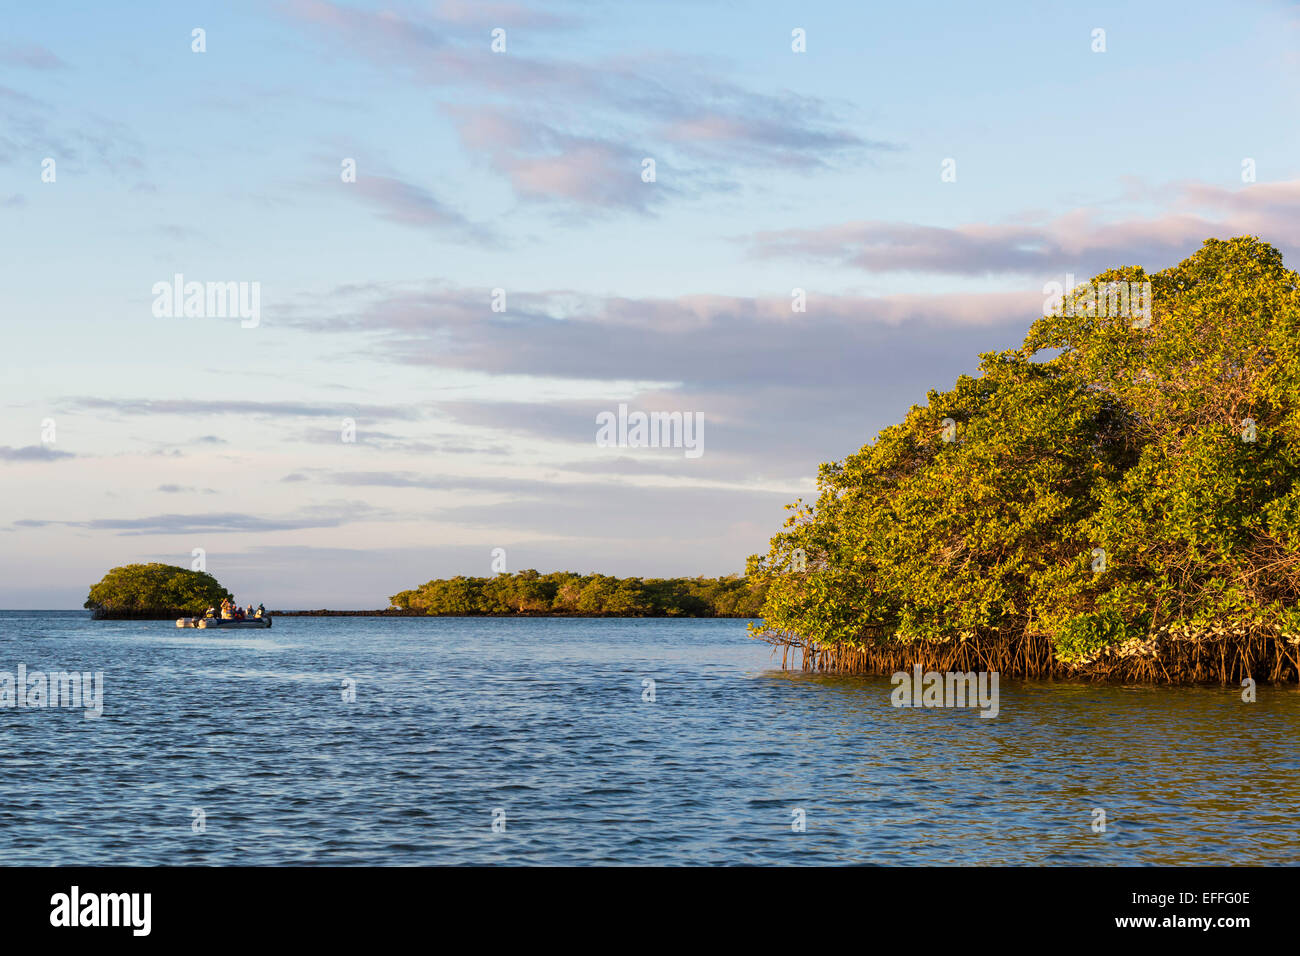 South America, Ecuador, Galapagos, Island, Santa Cruz, Caleta Tortuga Negra, Black Turtle Cove, mangrove forest, inflatable boat with tourists Stock Photo